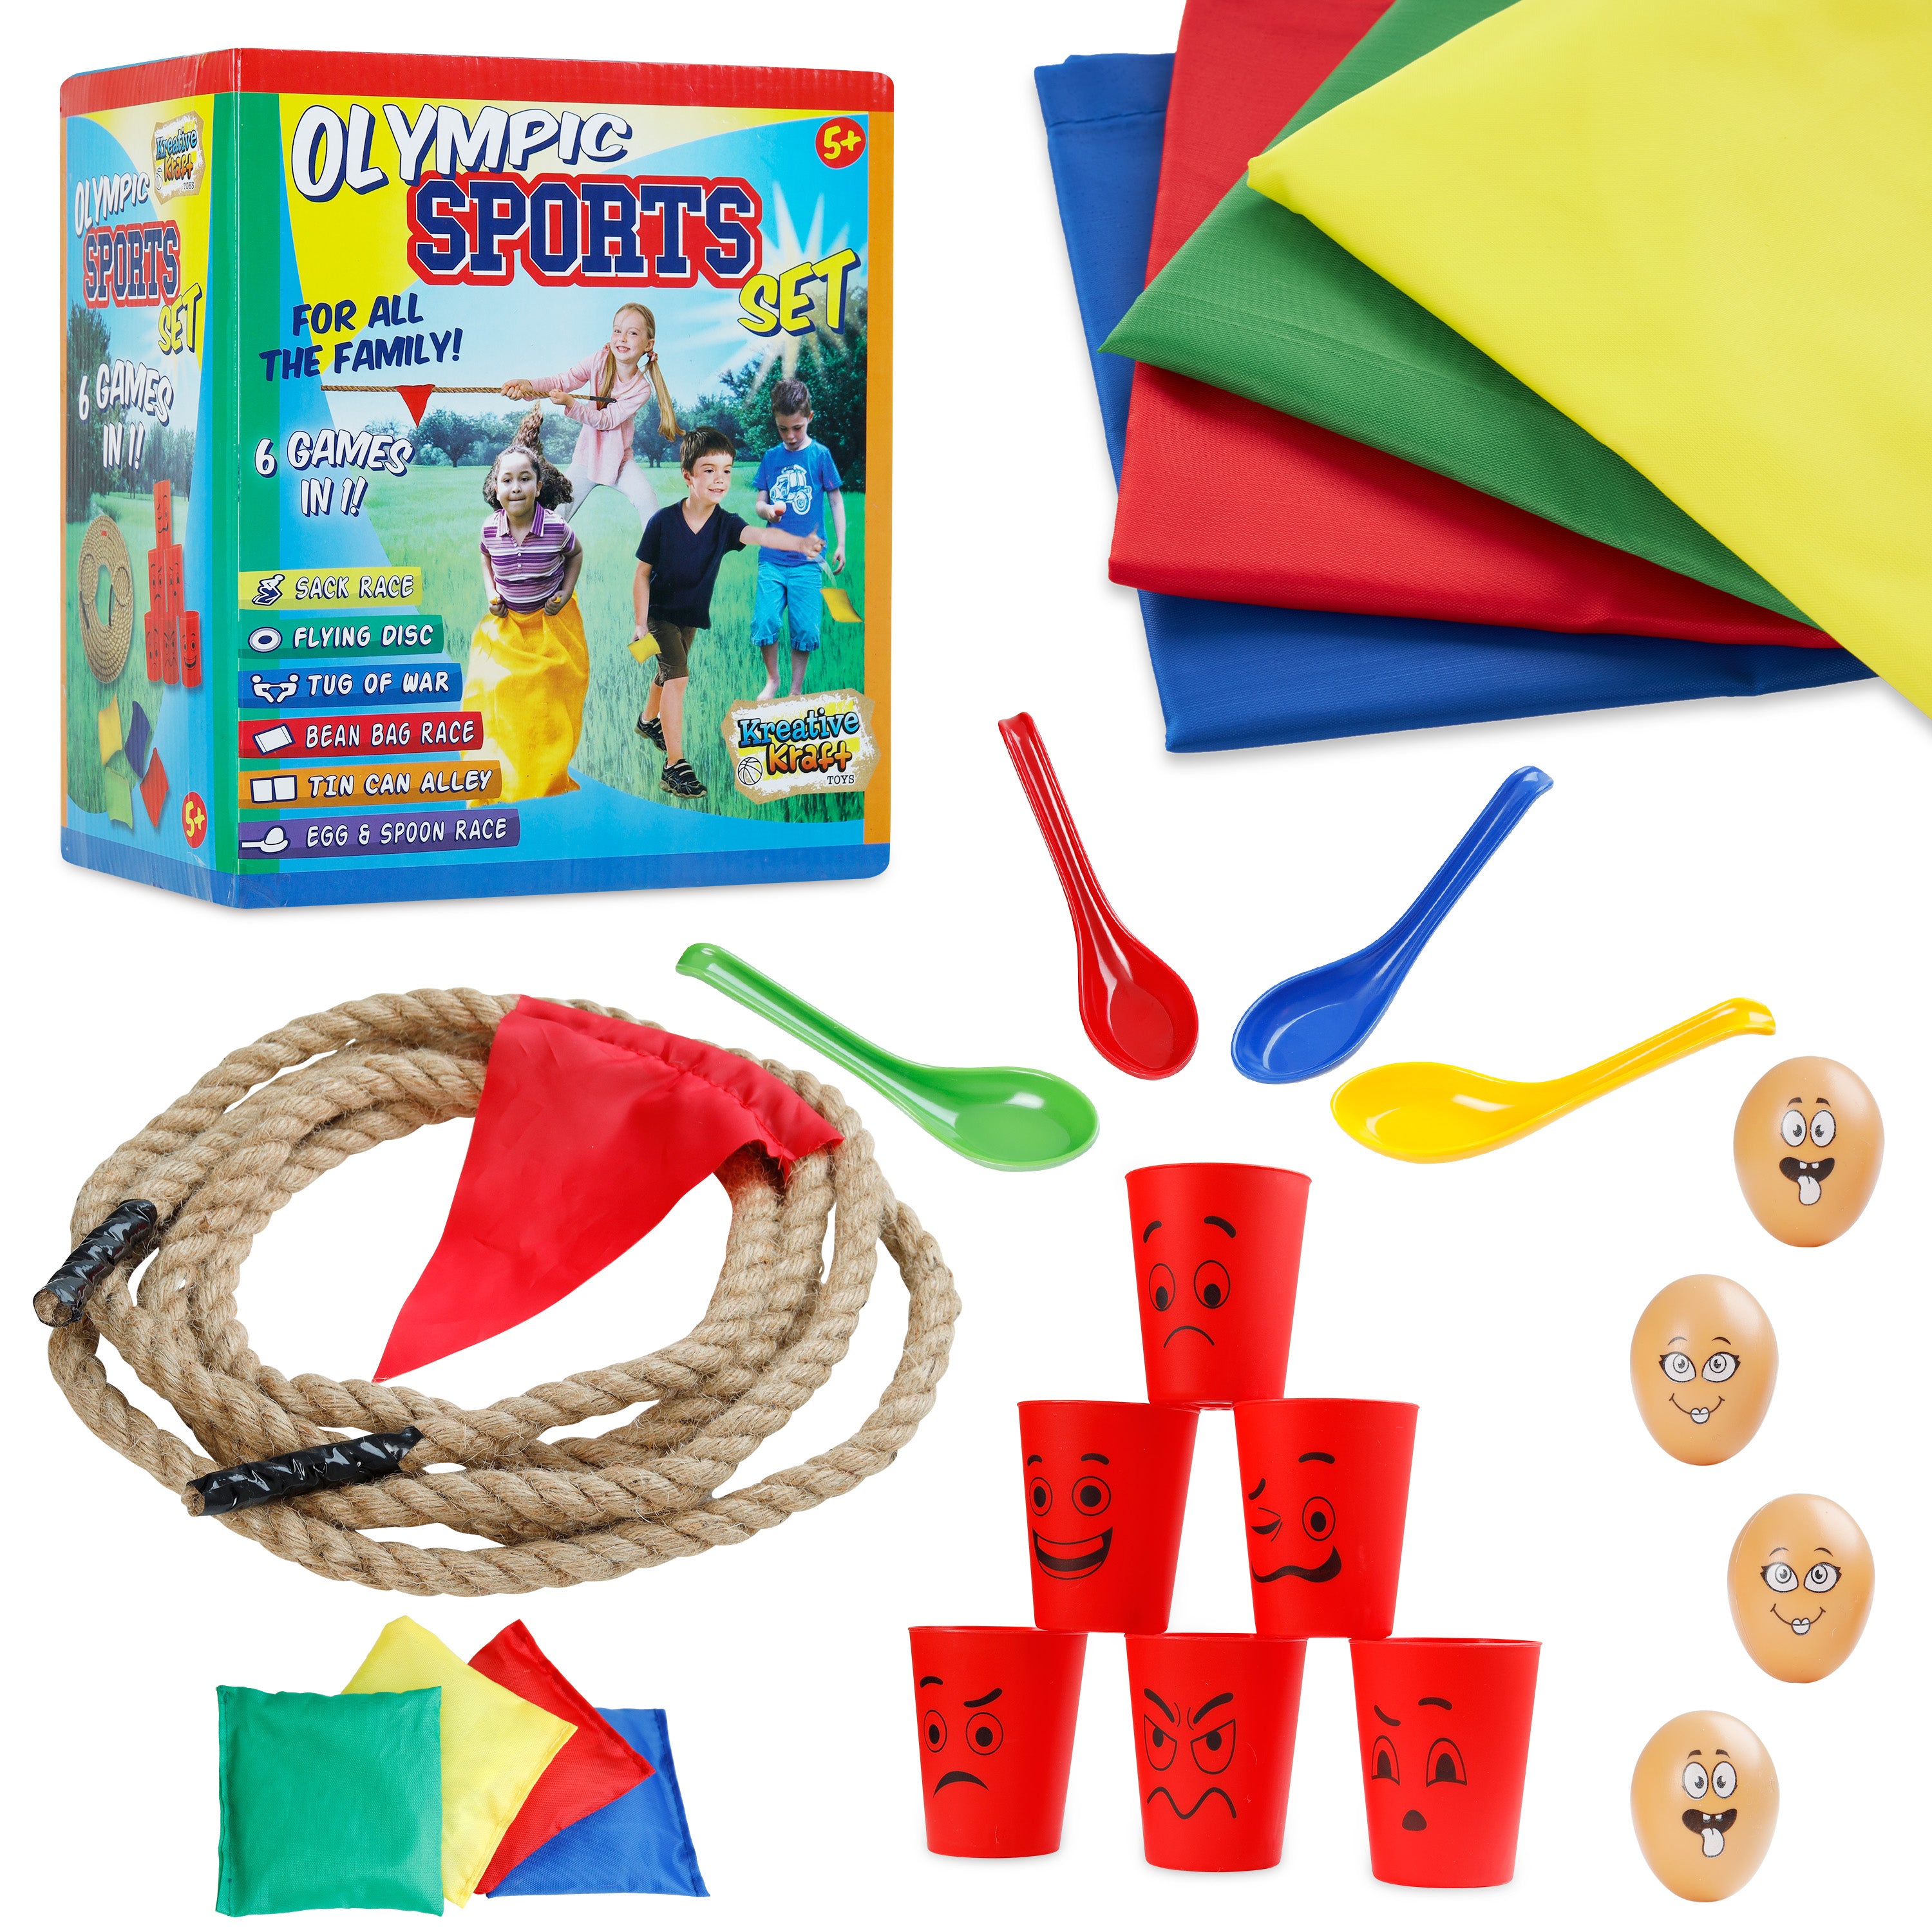 Throwing Ring Toss Game Set Cones Bean Bag Yard Game Pool Garden Outdoor  Interactive Game Party Supplies Kit